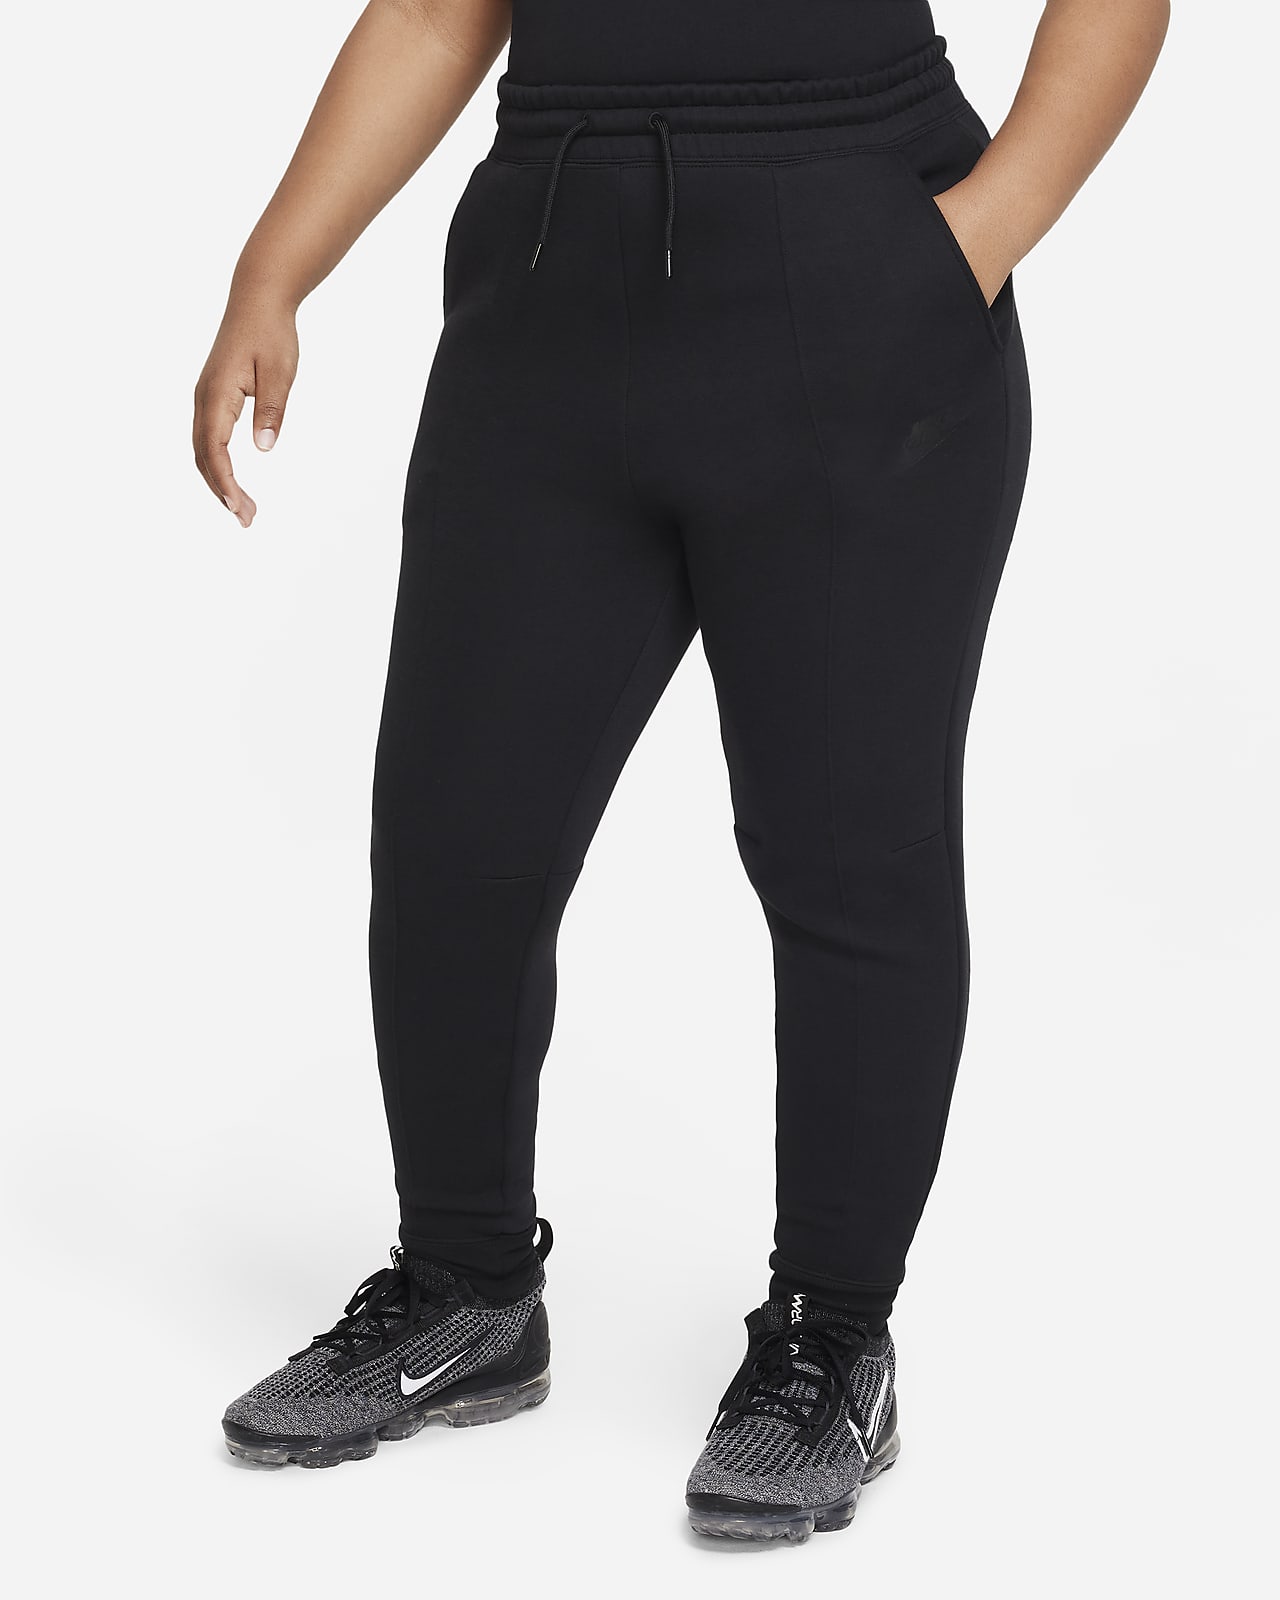 Survêtement Nike Sportswear Tech Fleece pour ado (fille) (taille élargie)